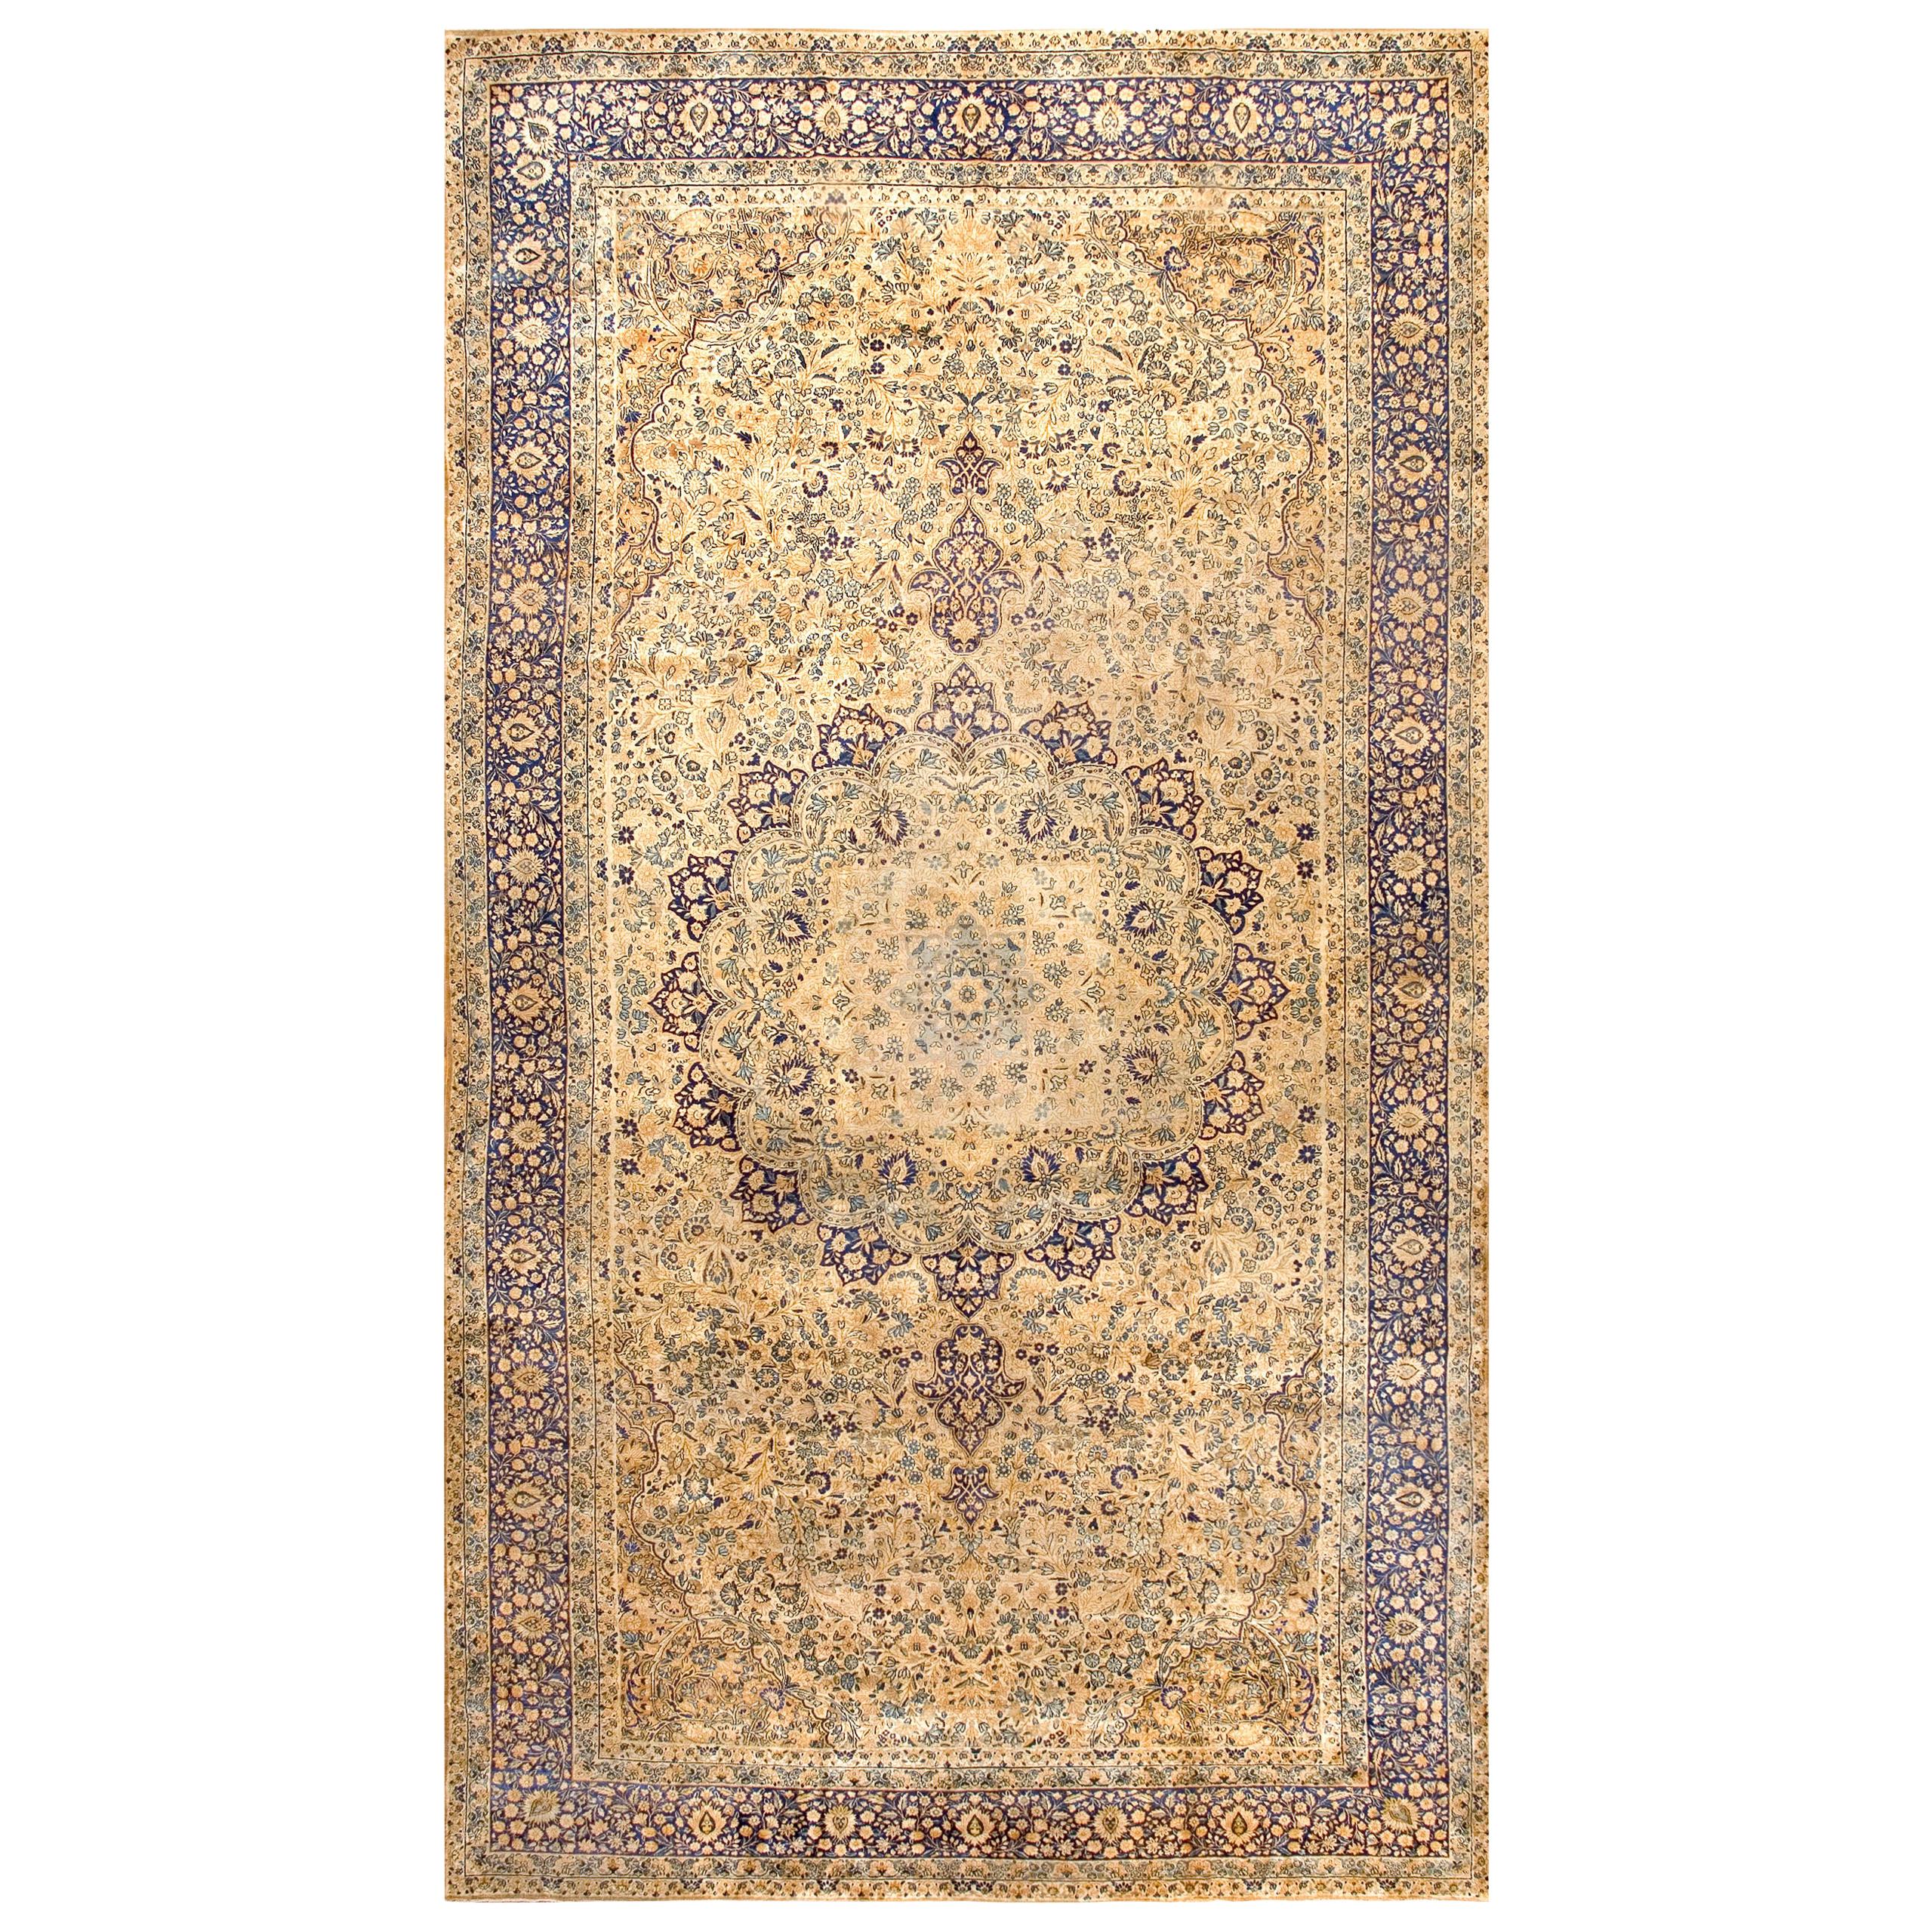 Early 20th Century Persian Kirman Carpet ( 10'9" x 19'6" - 327 x 594 ) For Sale